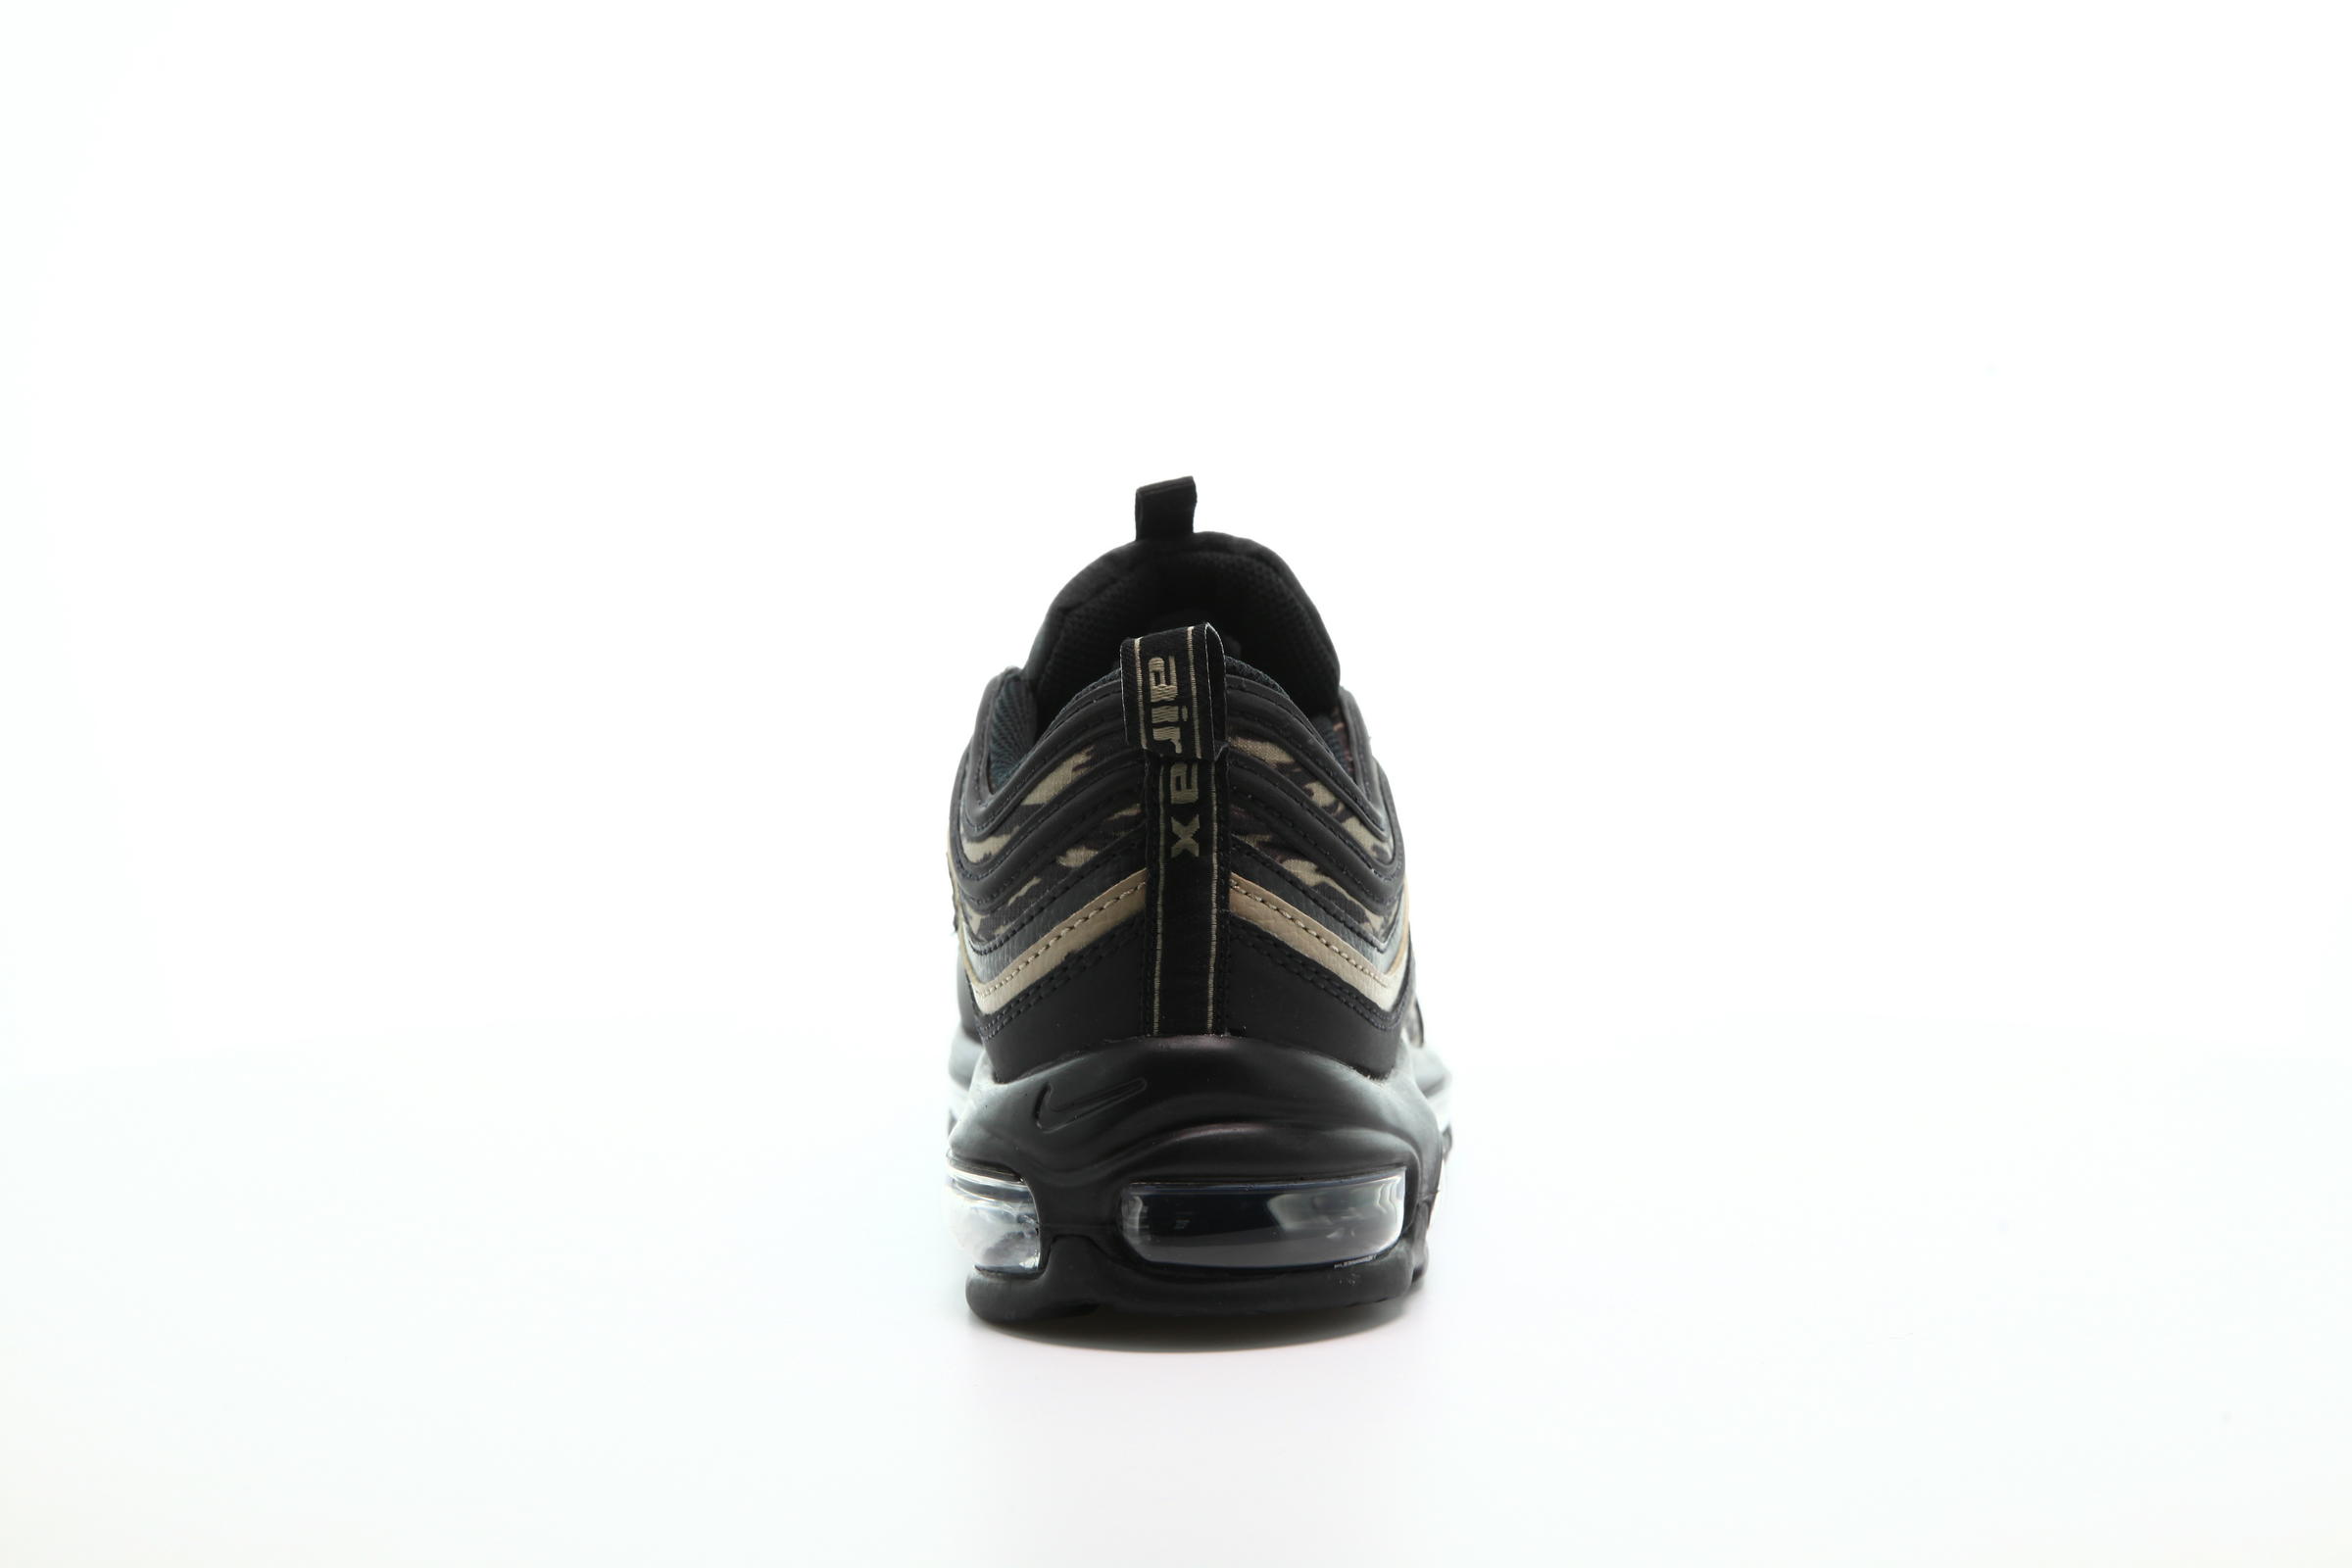 Nike Air Max 97 Tiger Camo Pack "Black"